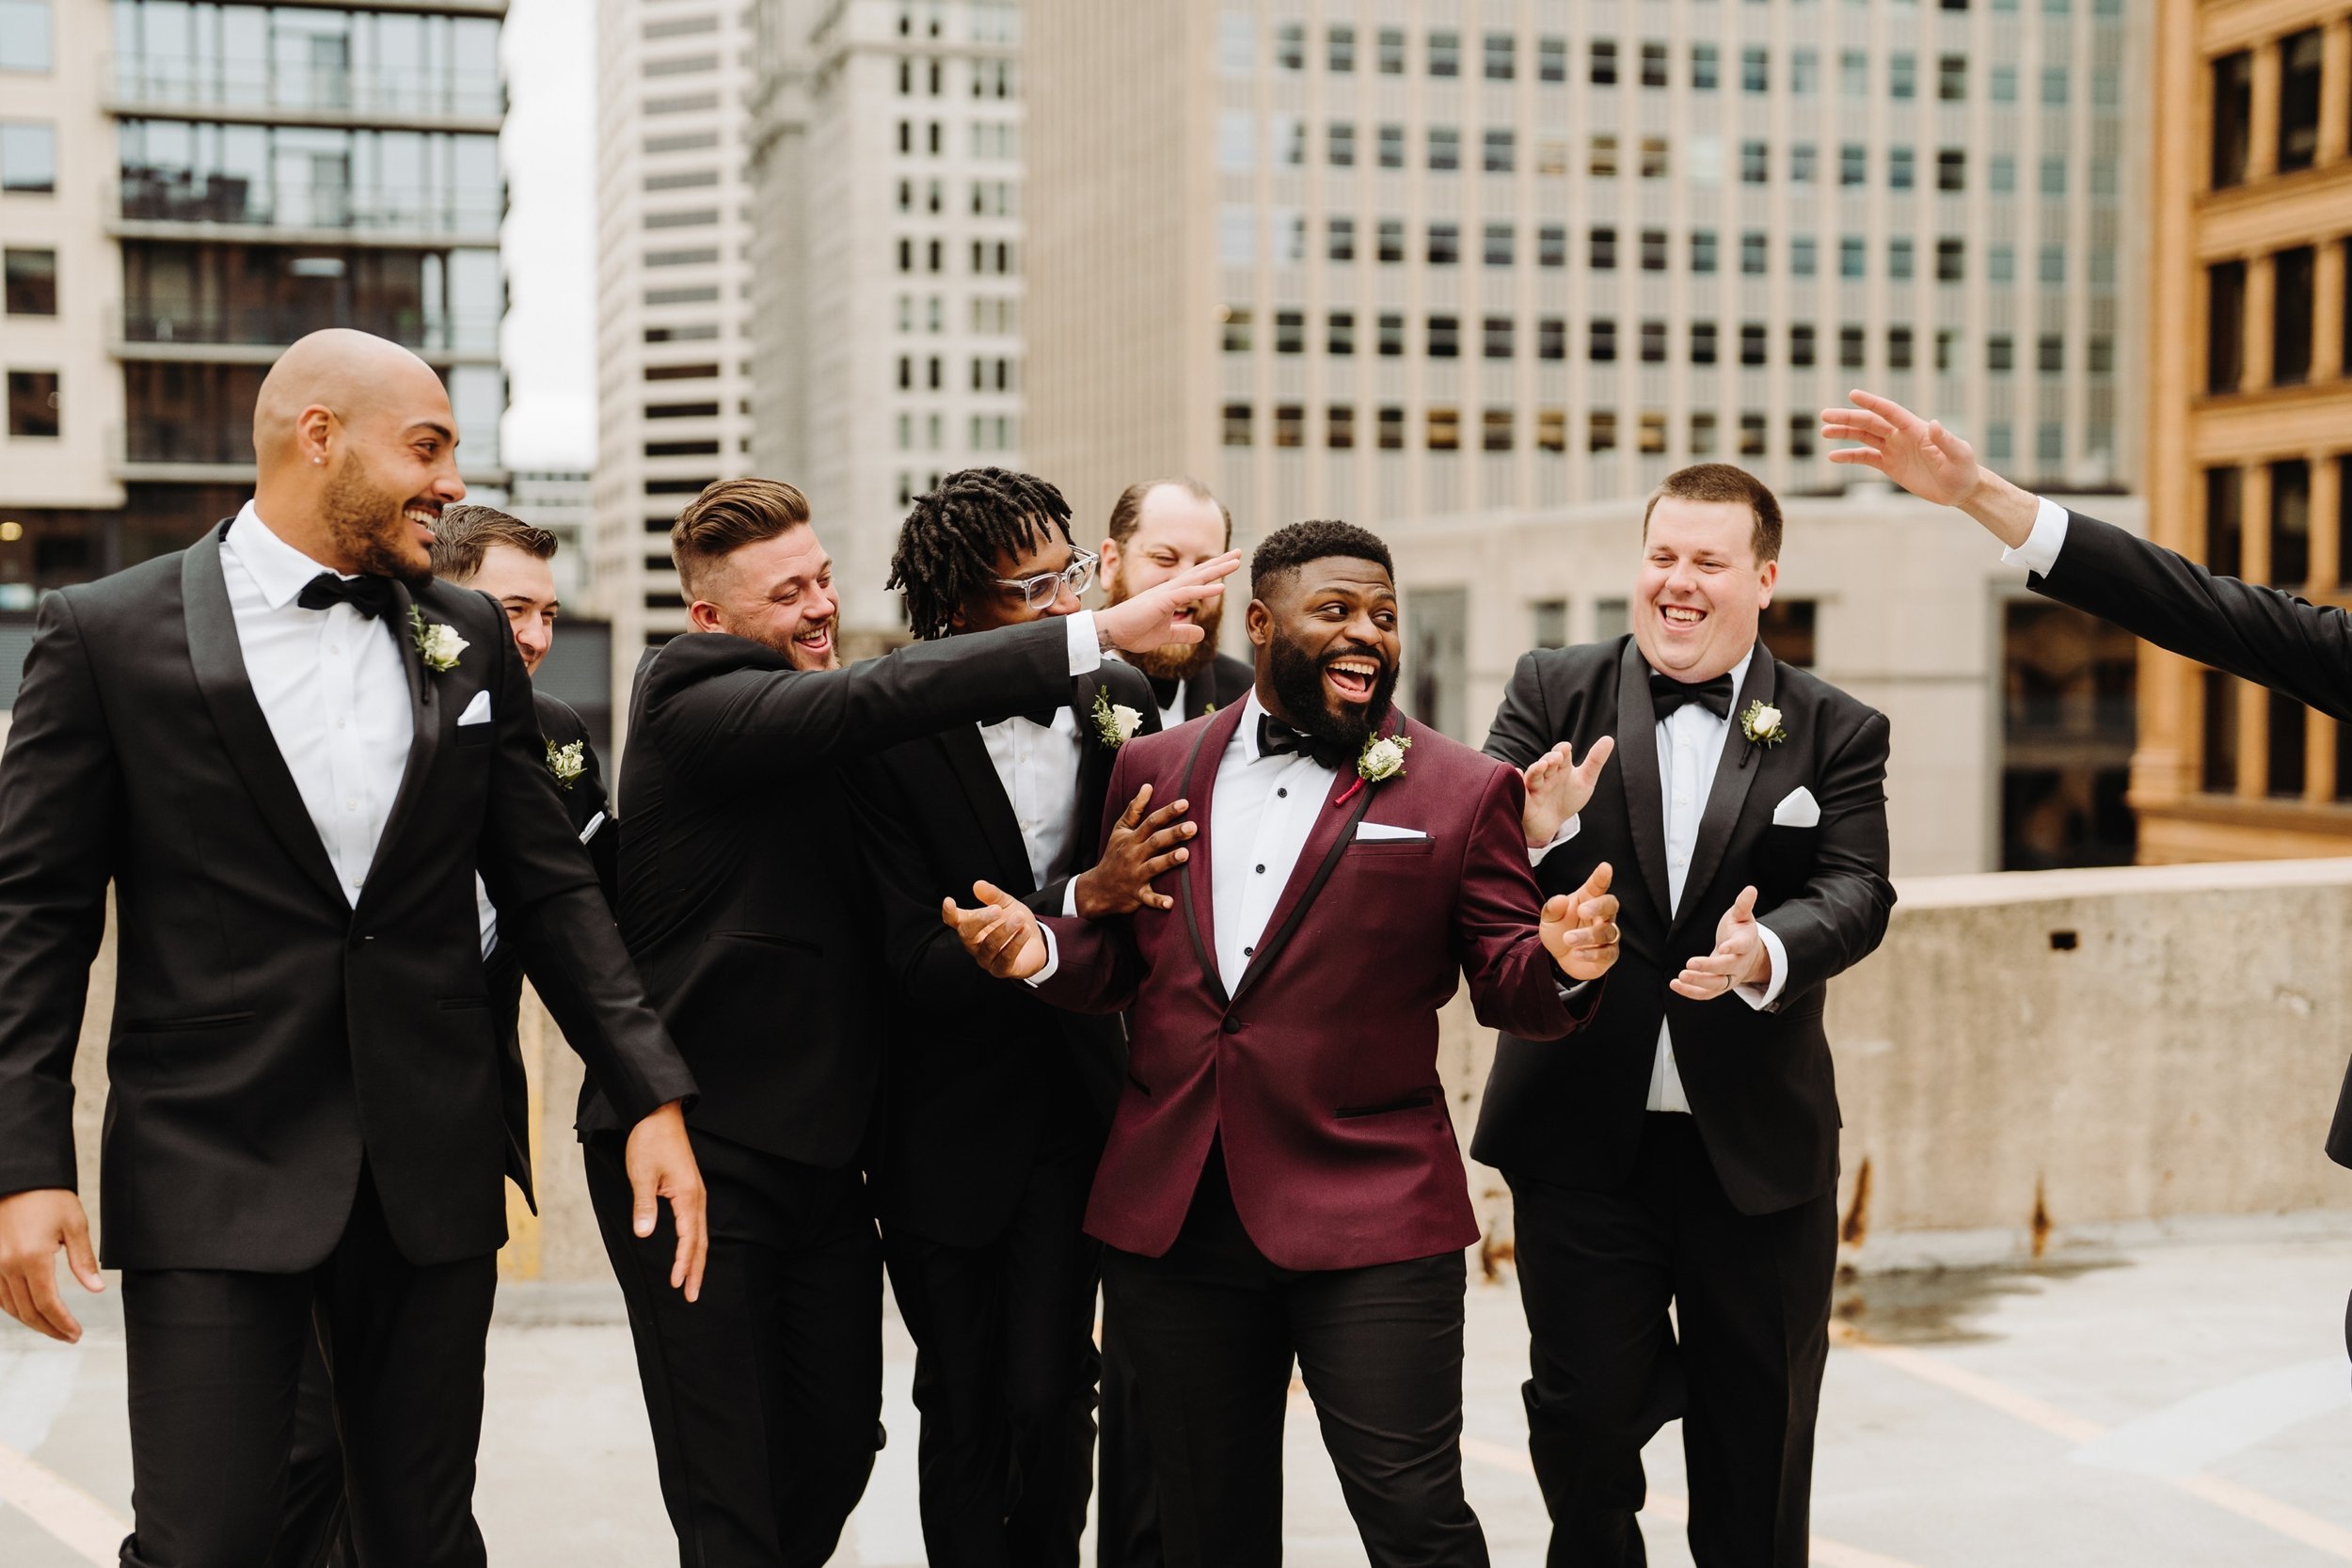 052_Groom and groomsmen in black and Burgundy tuxedos in downtown Minneapolis, Minnesota..jpg